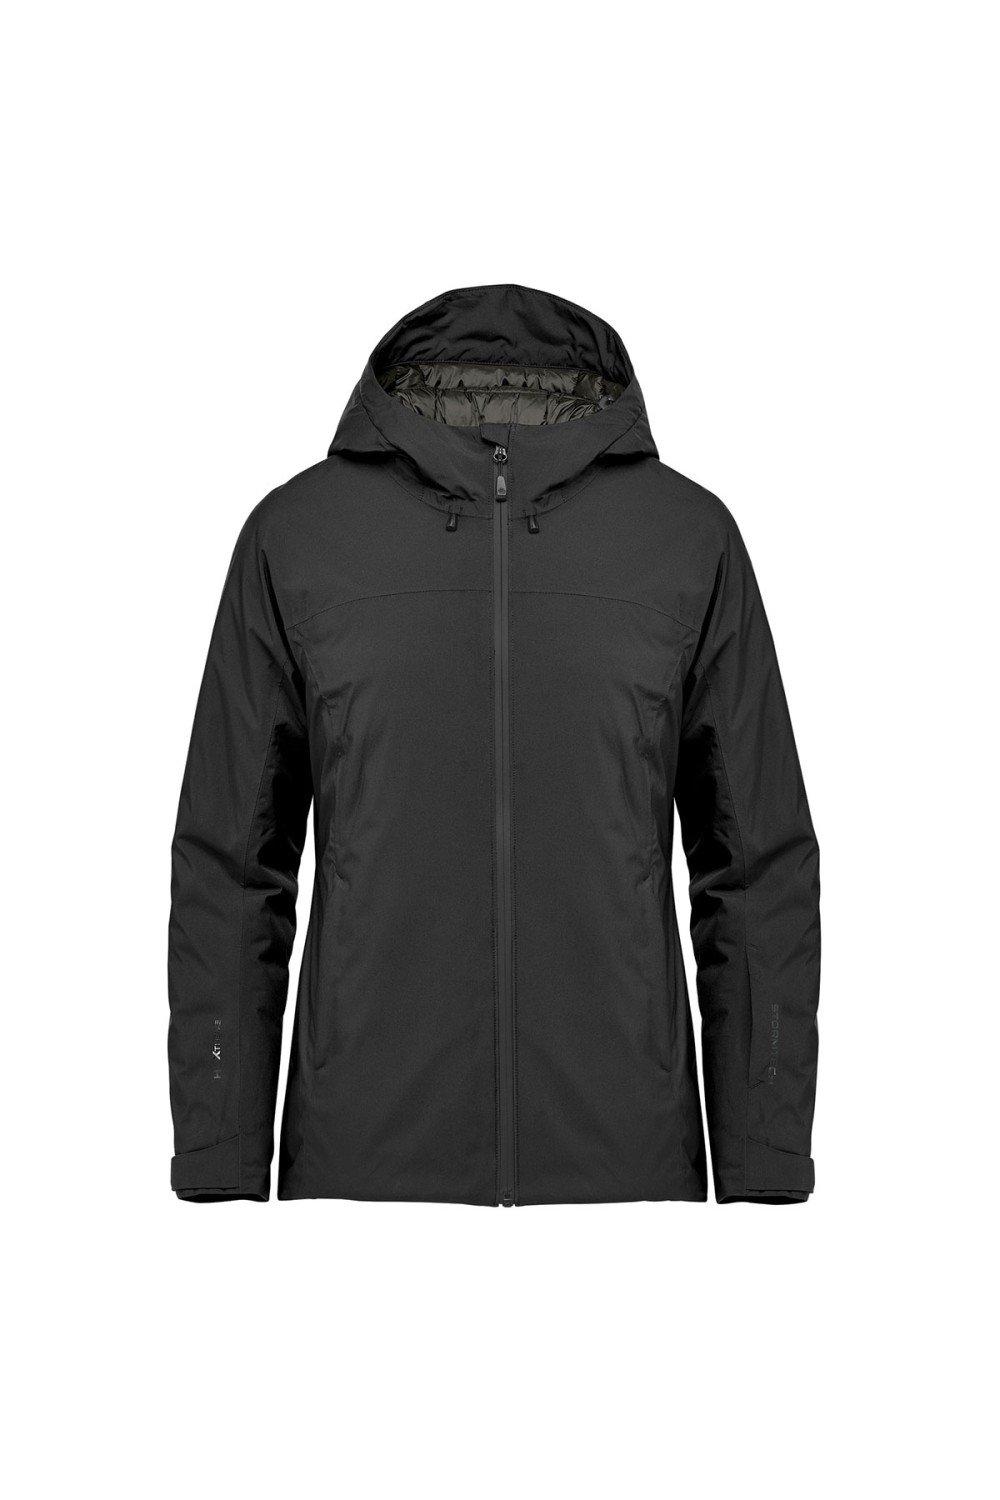 Куртка Nostromo Thermal Soft Shell Stormtech, черный куртка nostromo thermal soft shell stormtech серый